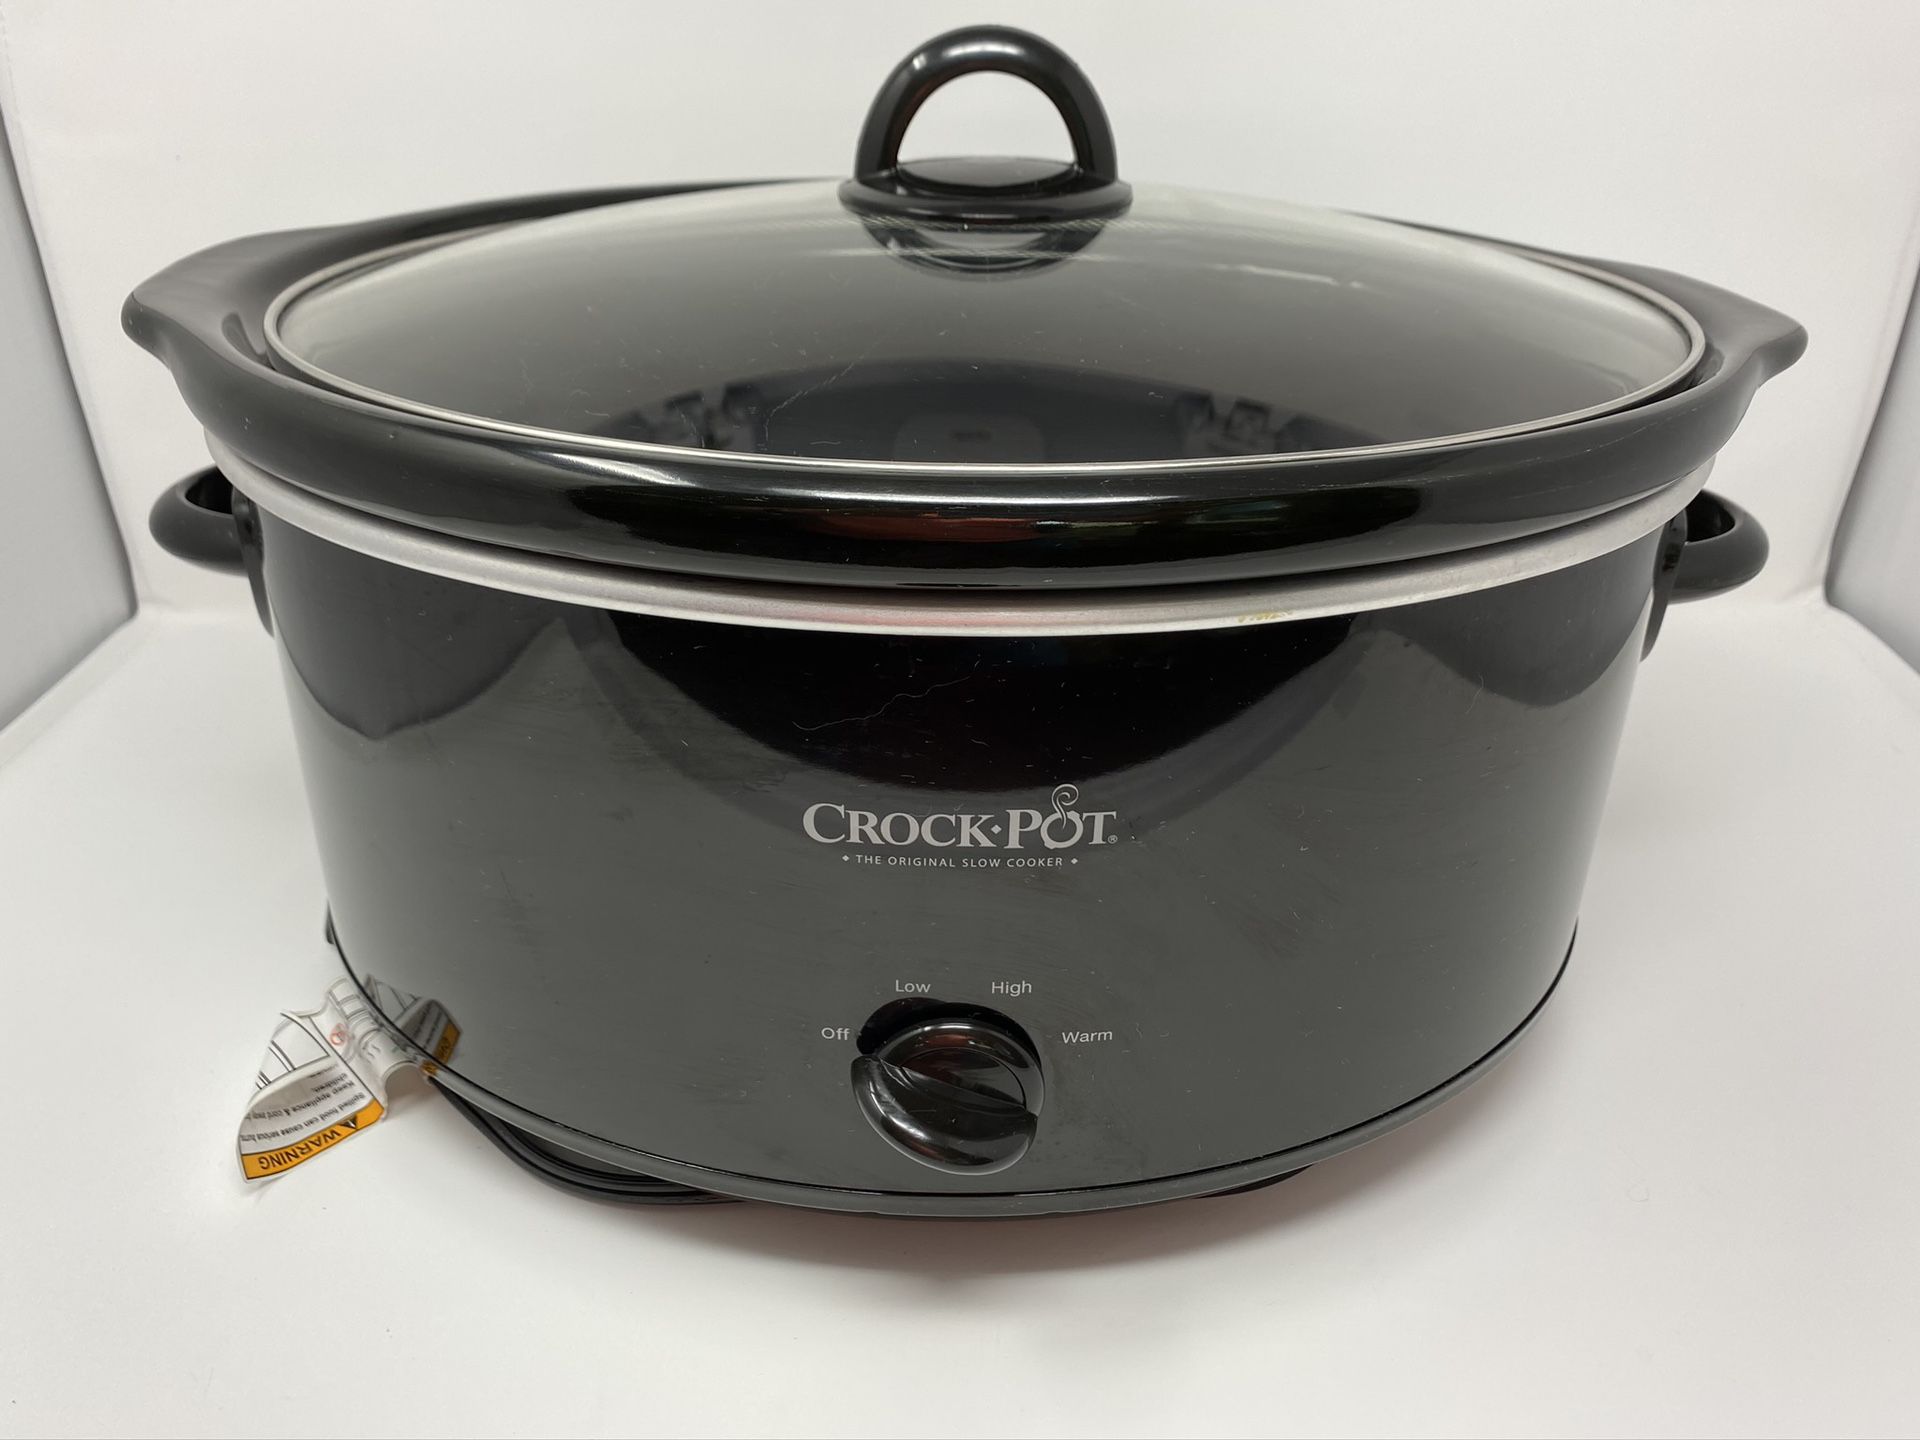 Crock-Pot SCV800-B 8 Qt. Oval Manual Slow Cooker Black- Fully Functional